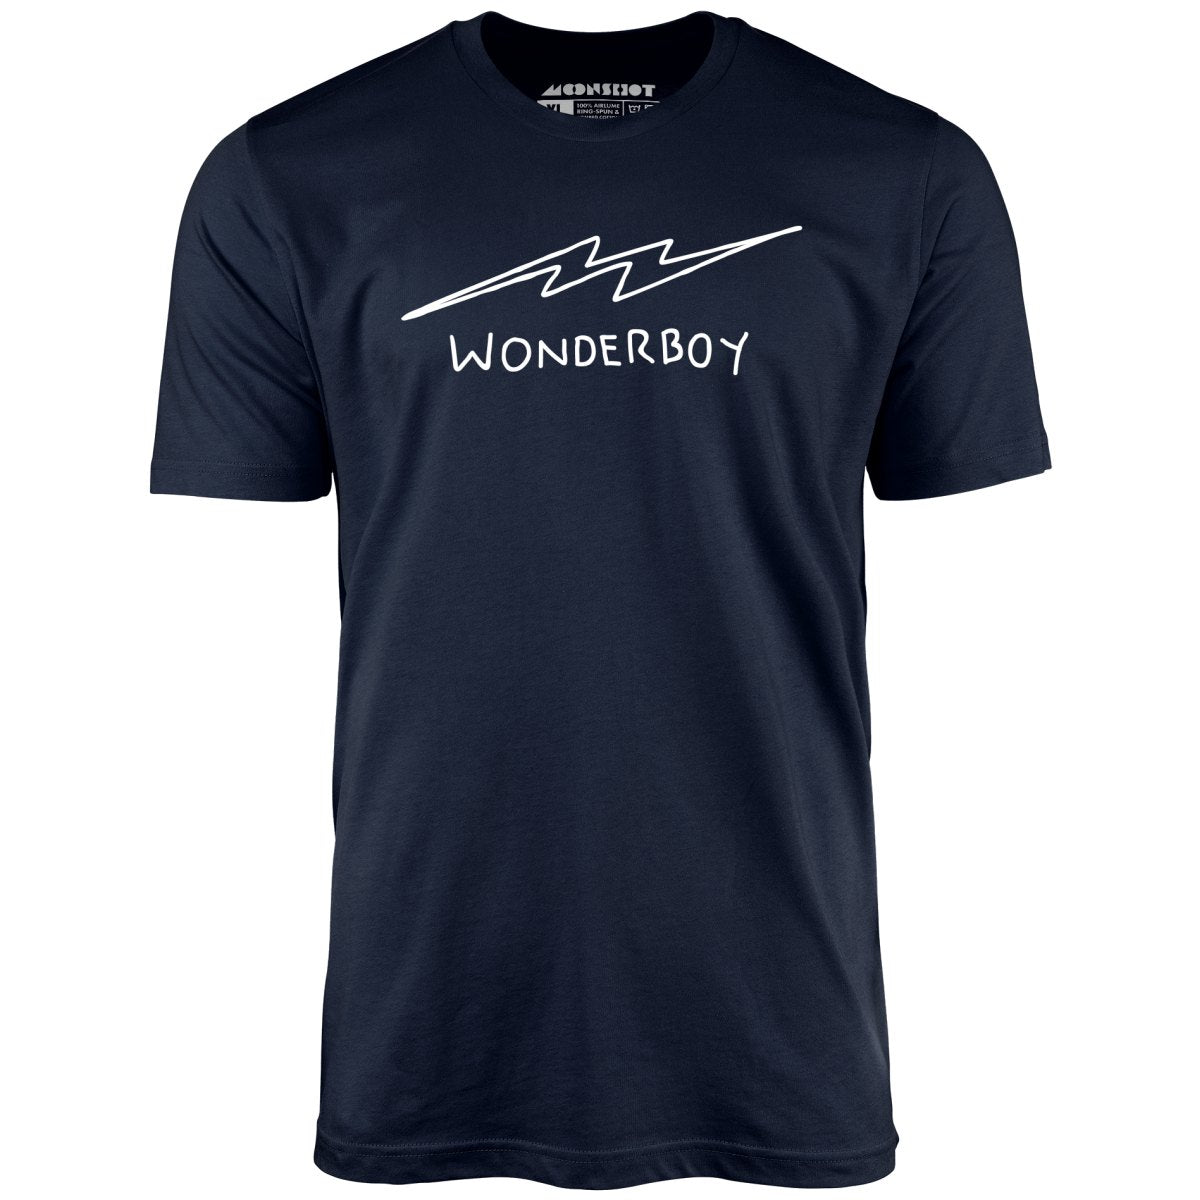 Roy Hobbs Wonderboy Bat - Unisex T-Shirt